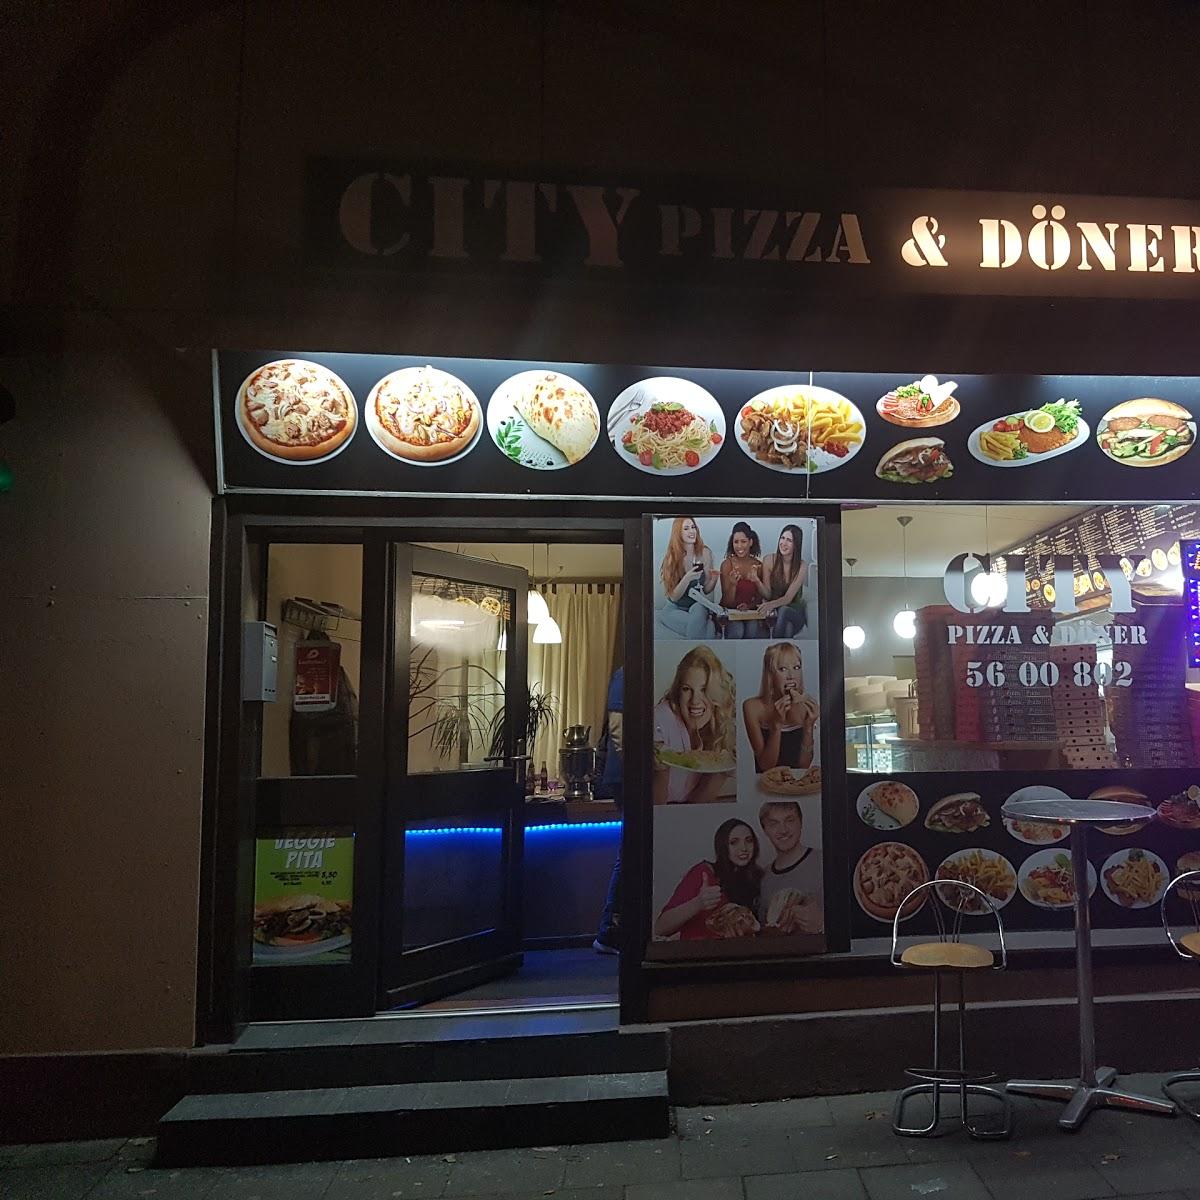 Restaurant "City Pizza" in Bielefeld